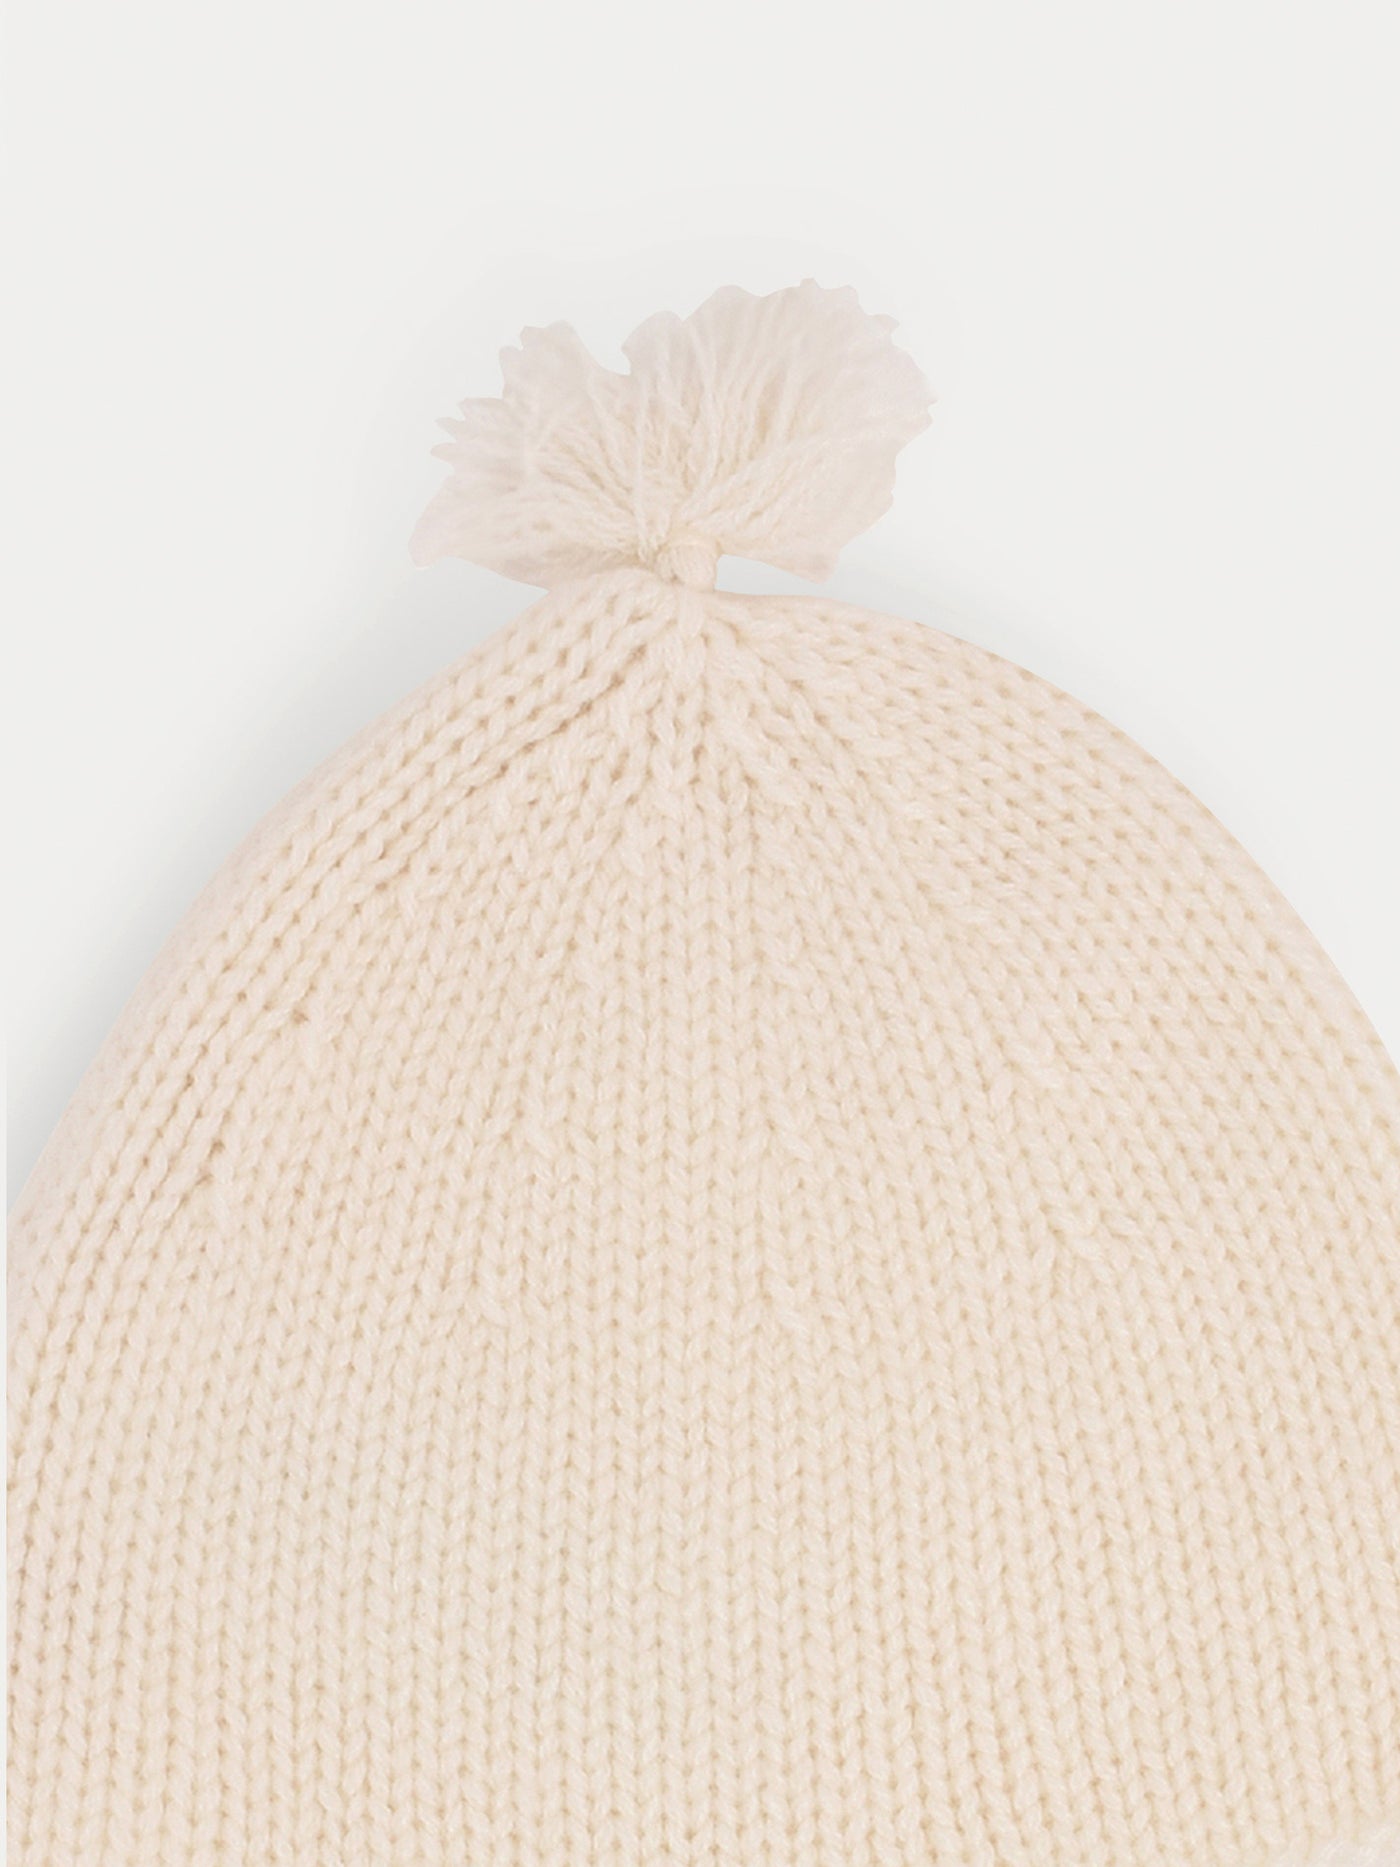 Cashmere Baby beanie hat milk white with pompoms